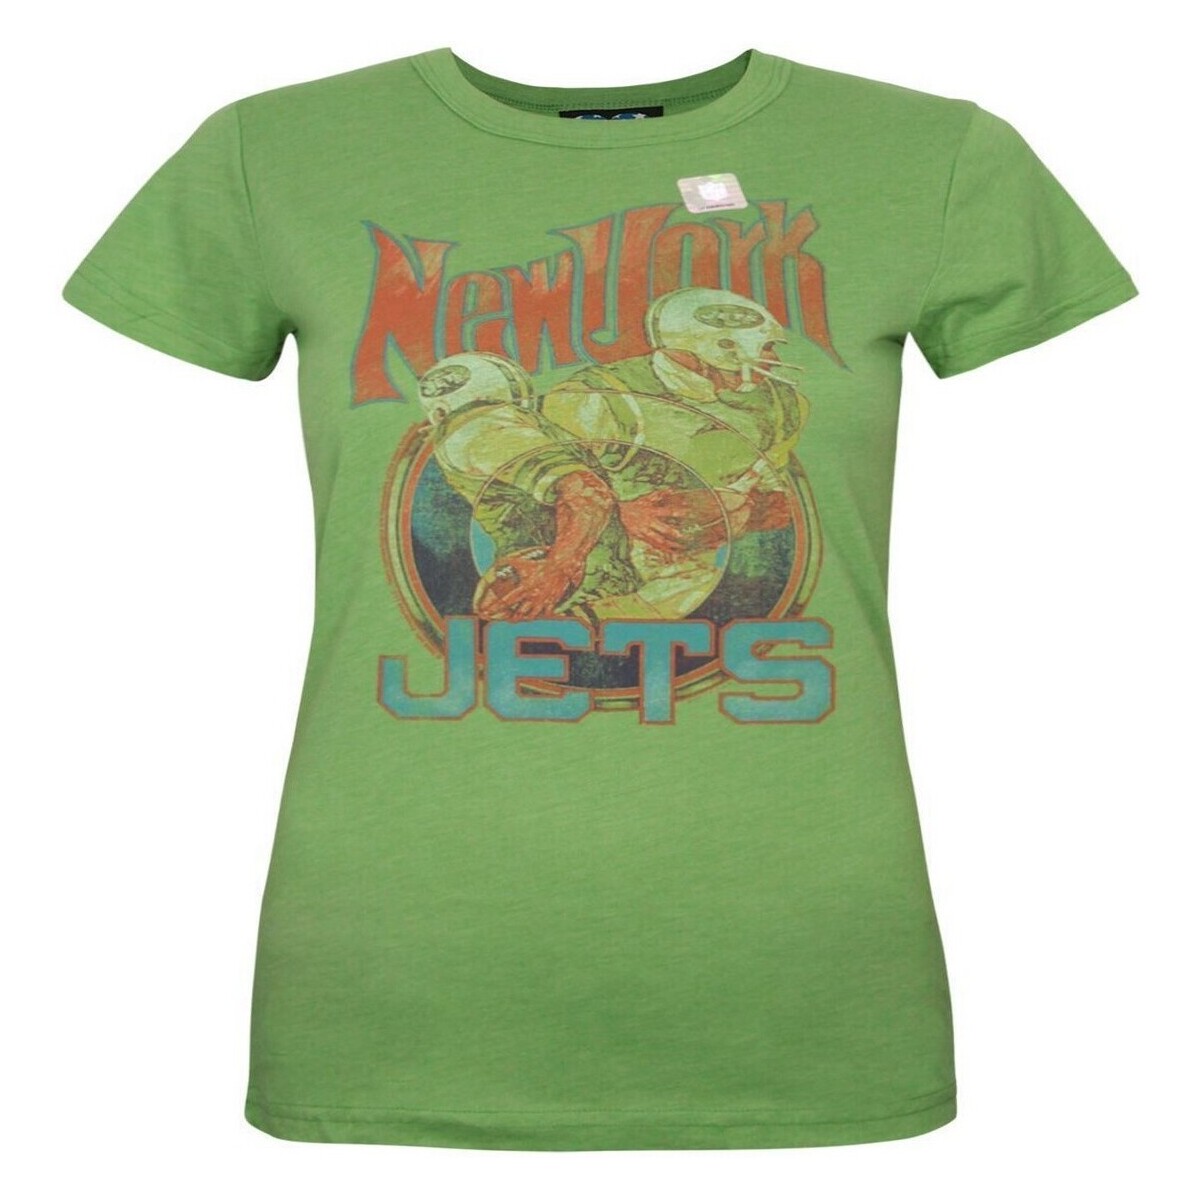 Abbigliamento Donna T-shirts a maniche lunghe Junk Food New York Jets Verde